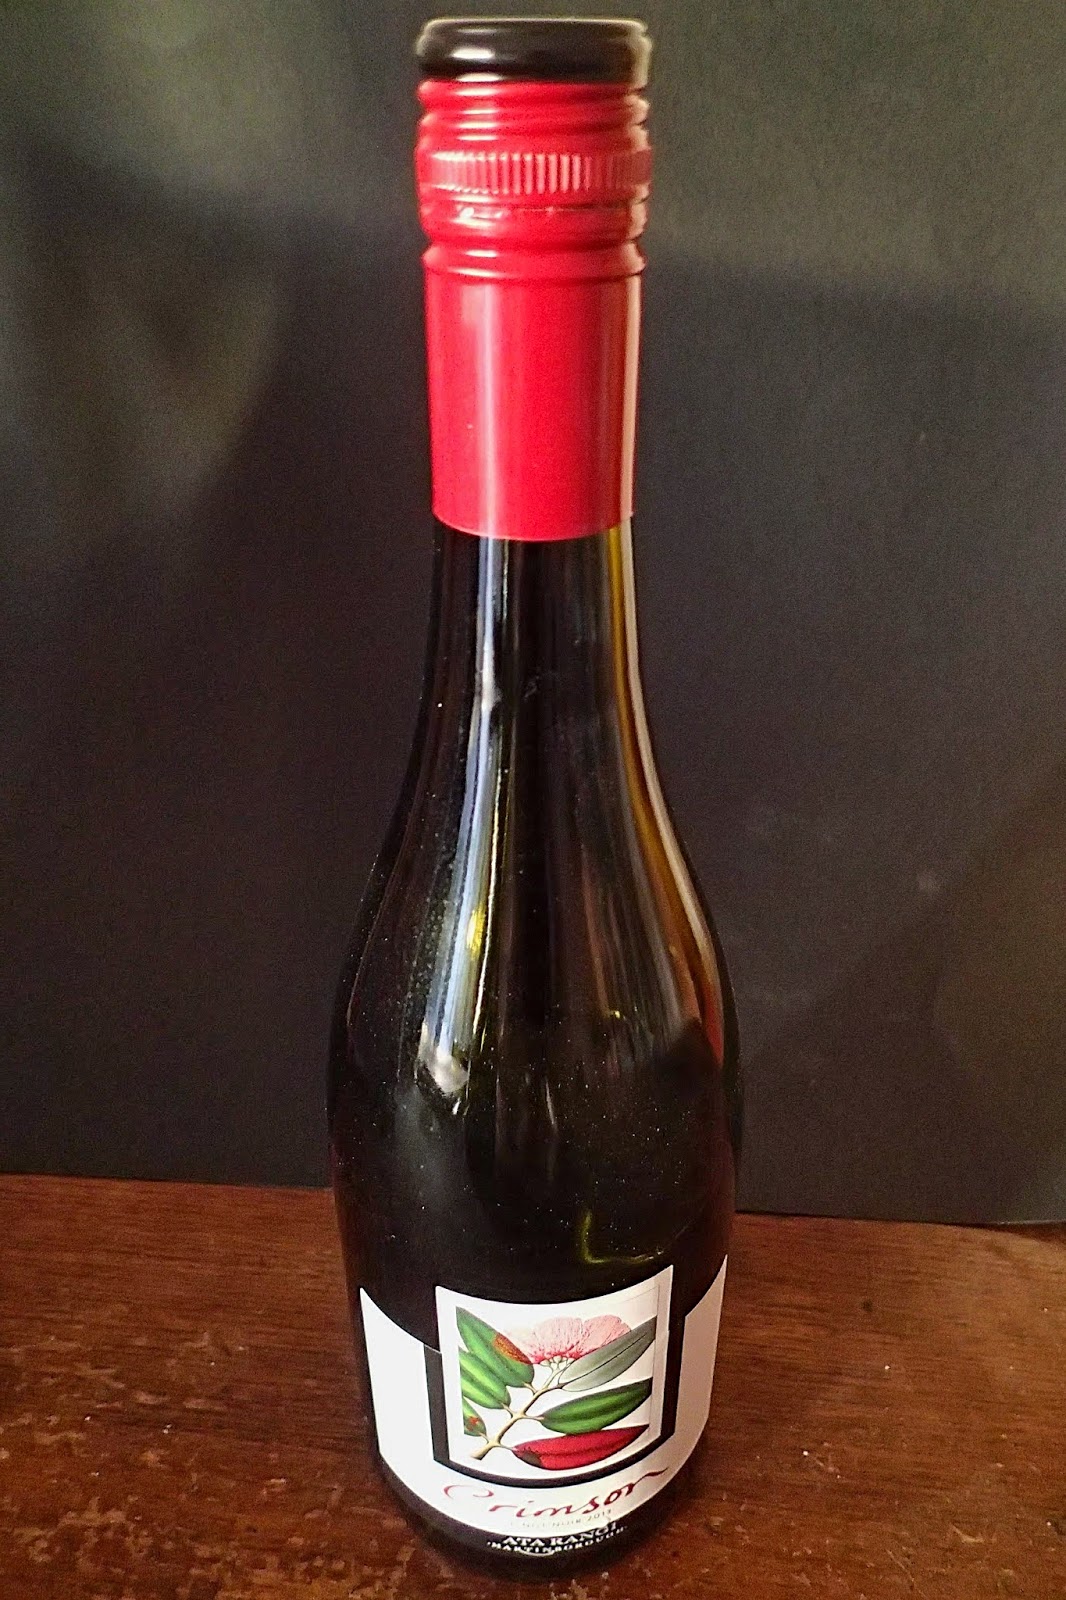 Ata Rangi Crimson Pinot Noir 2013 Wine Tasting Review